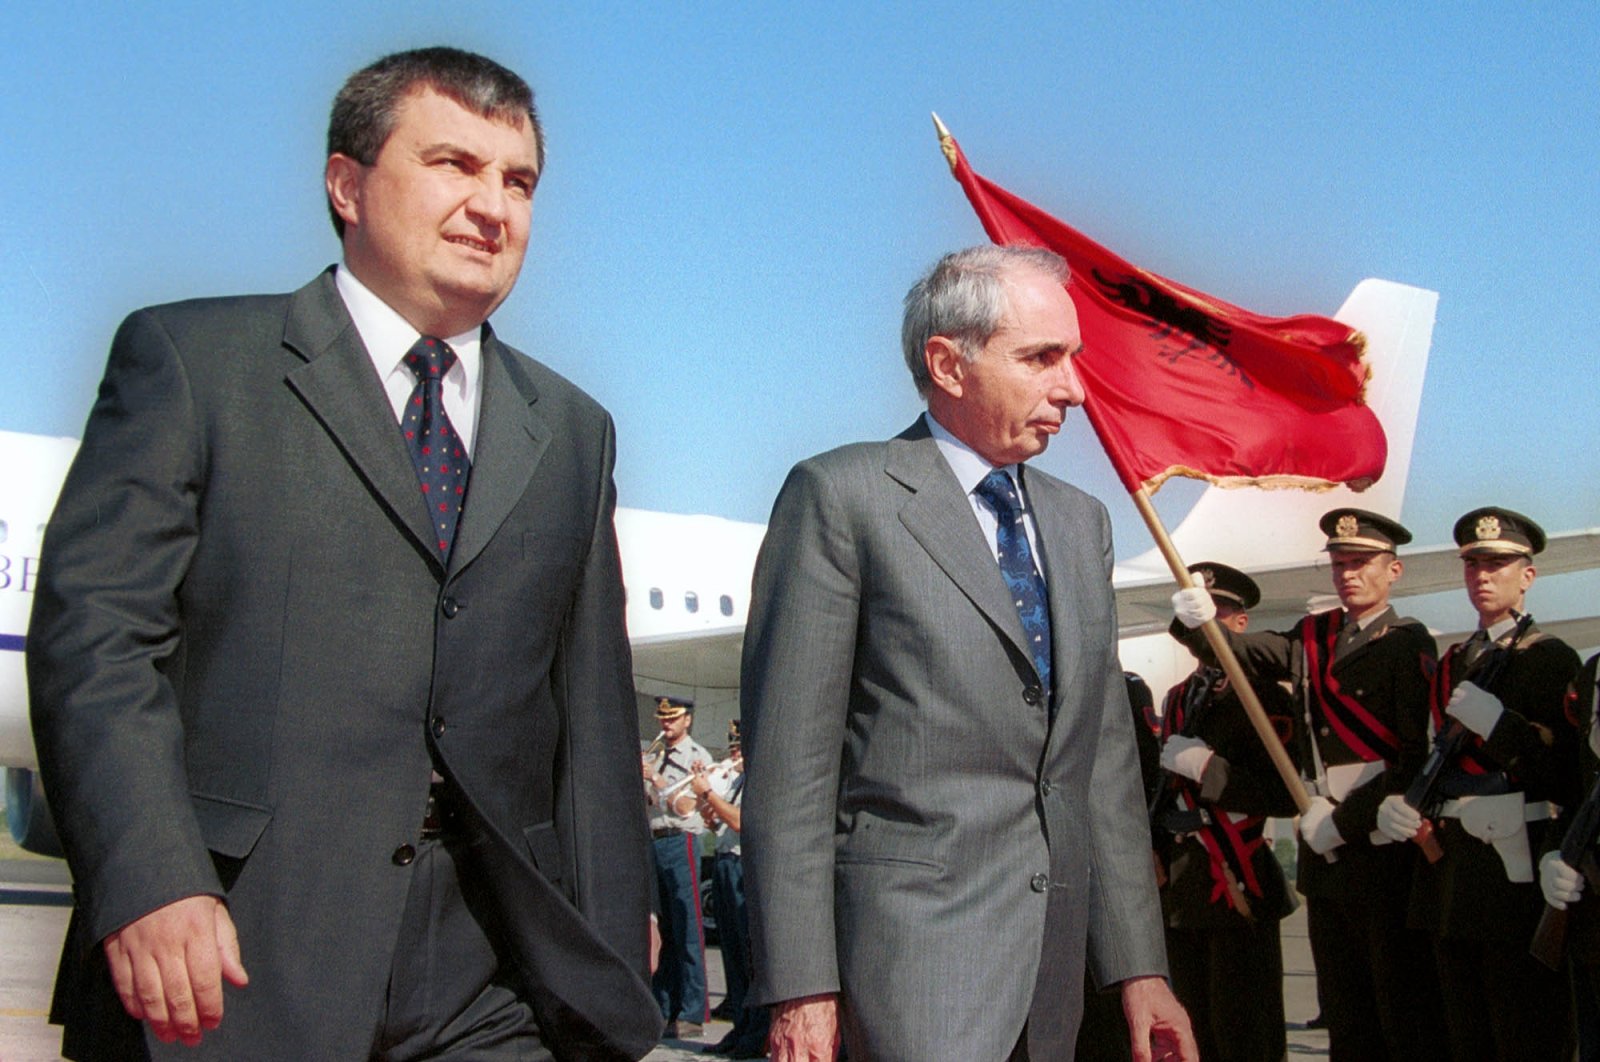 Then-Italian Prime Minister Giuliano Amato meeting with current Albanian President Ilir Meta at the Tirana Rinas airport, Albania, July 28, 2000. (AP Photo)